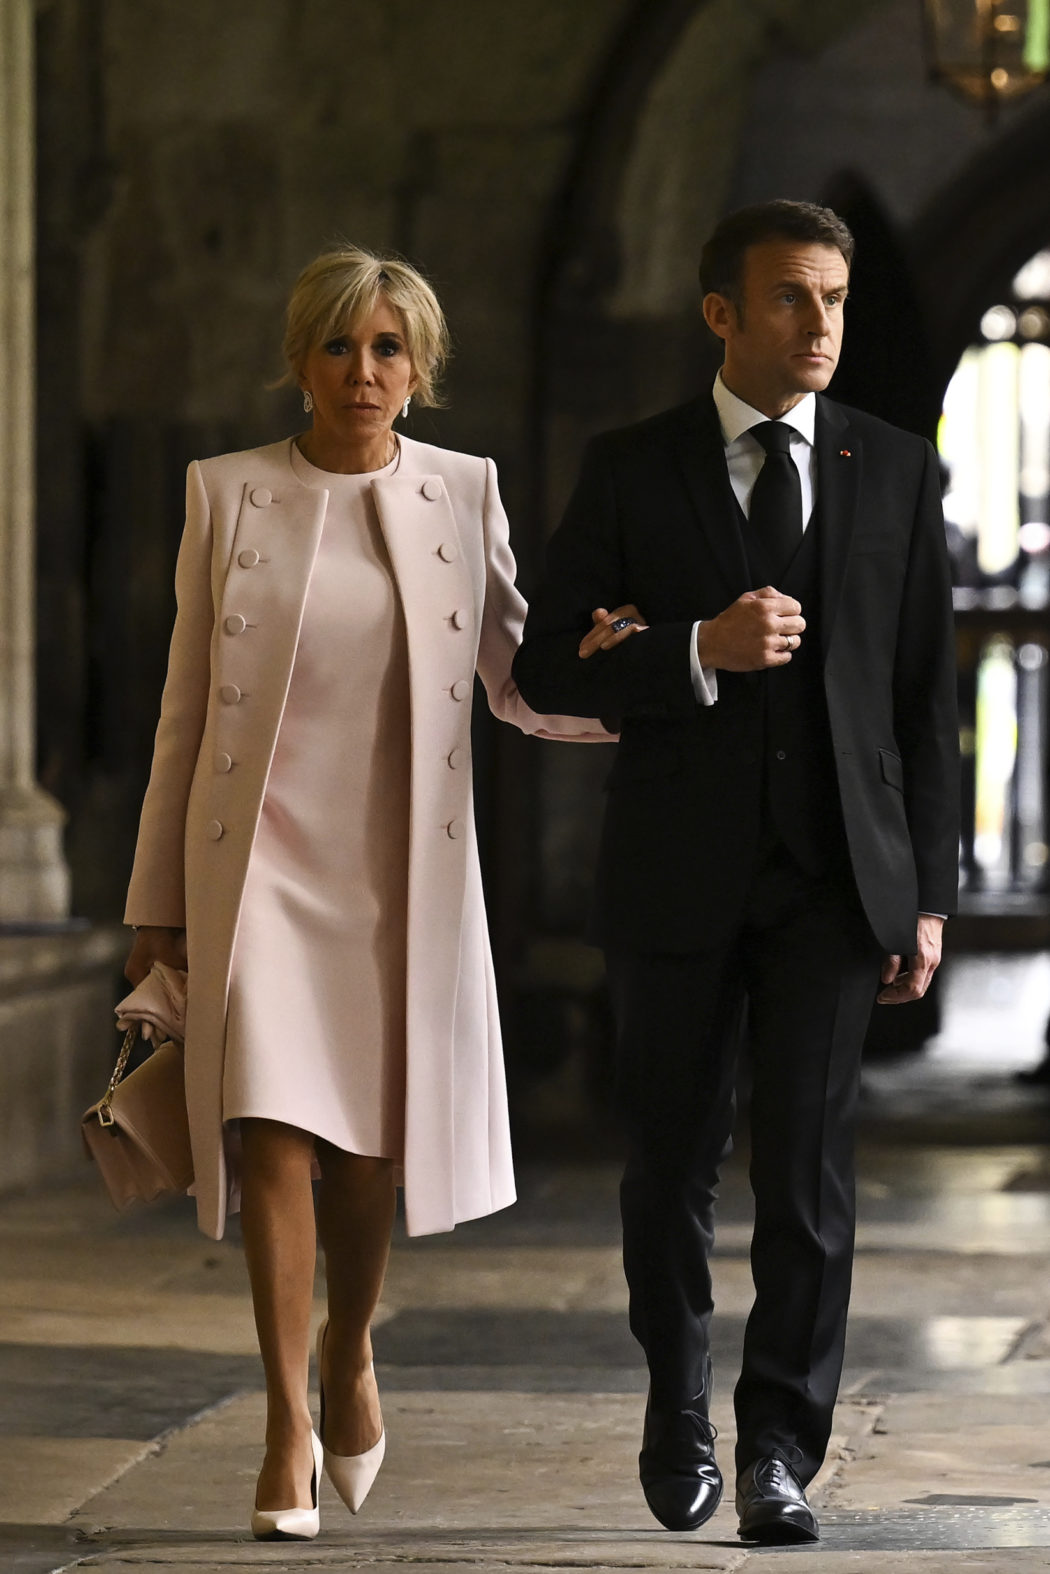 French President Emmanuel Macron and Brigitte Macron